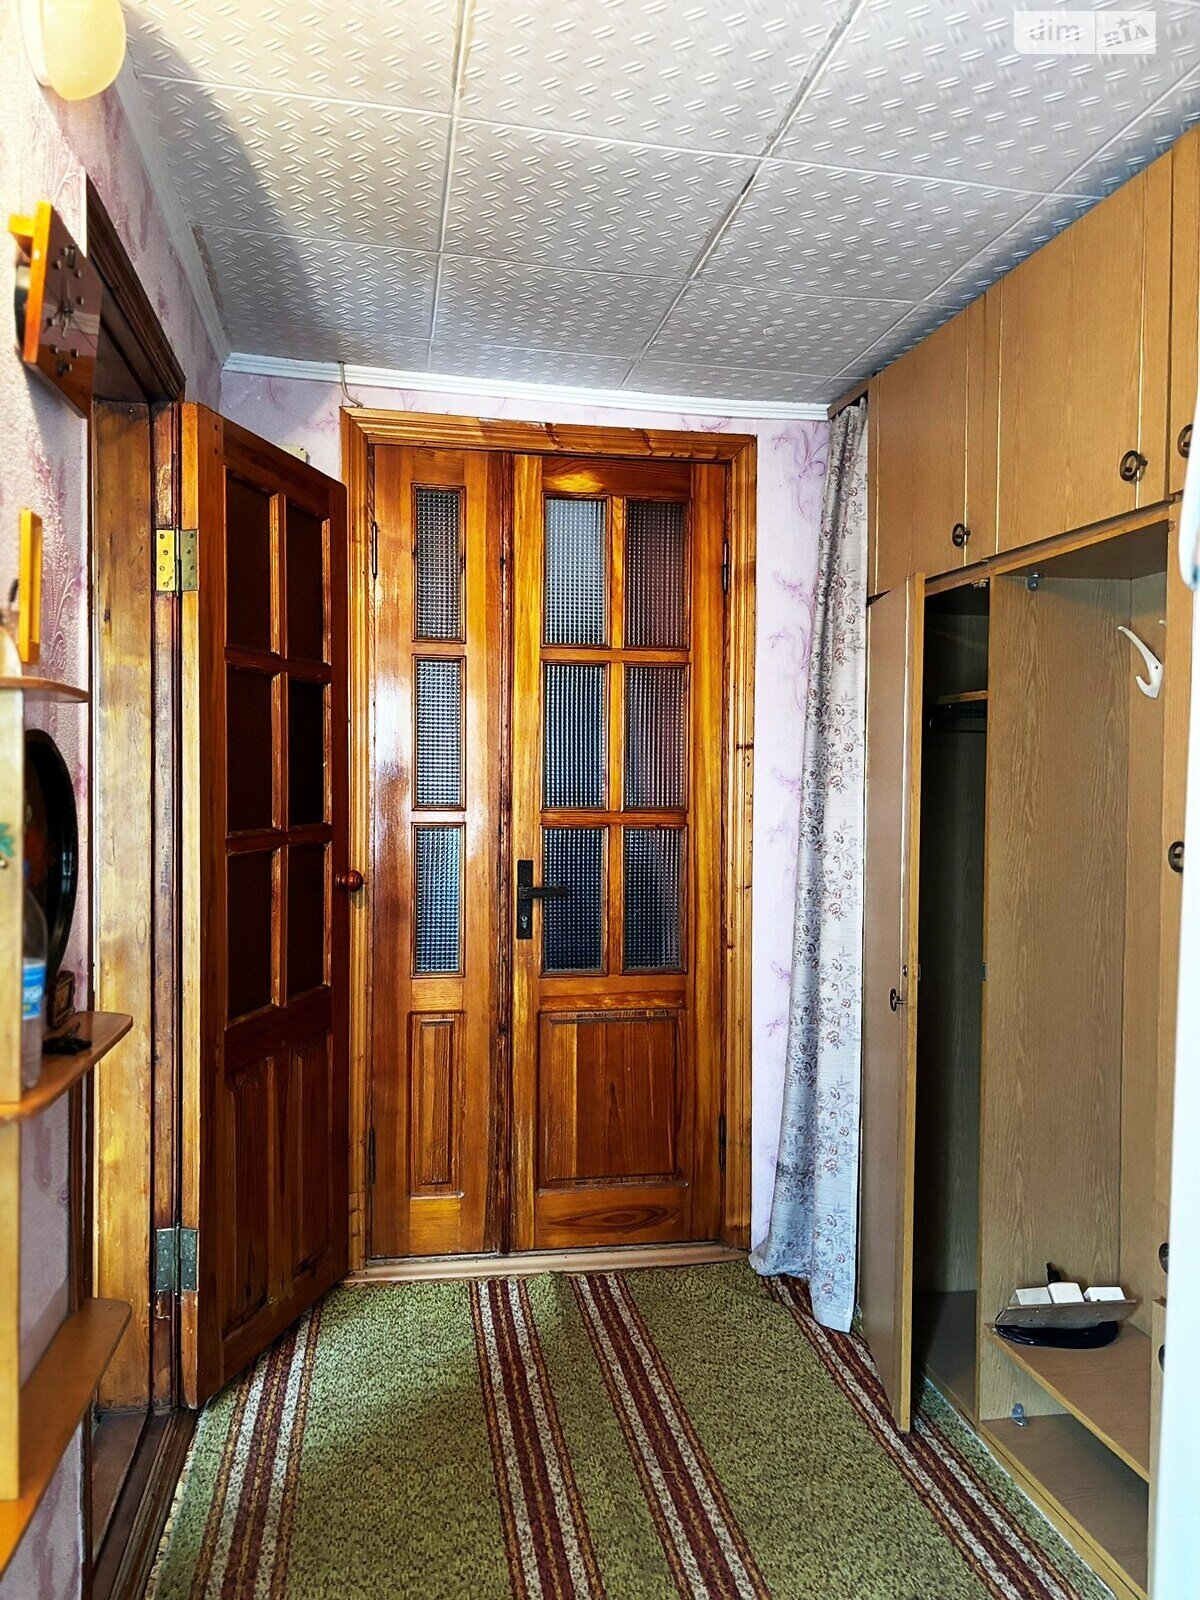 Продажа части дома в Черкассах, улица Сагайдачного Гетьмана (Ватутина), район Зеленый, 3 комнаты фото 1